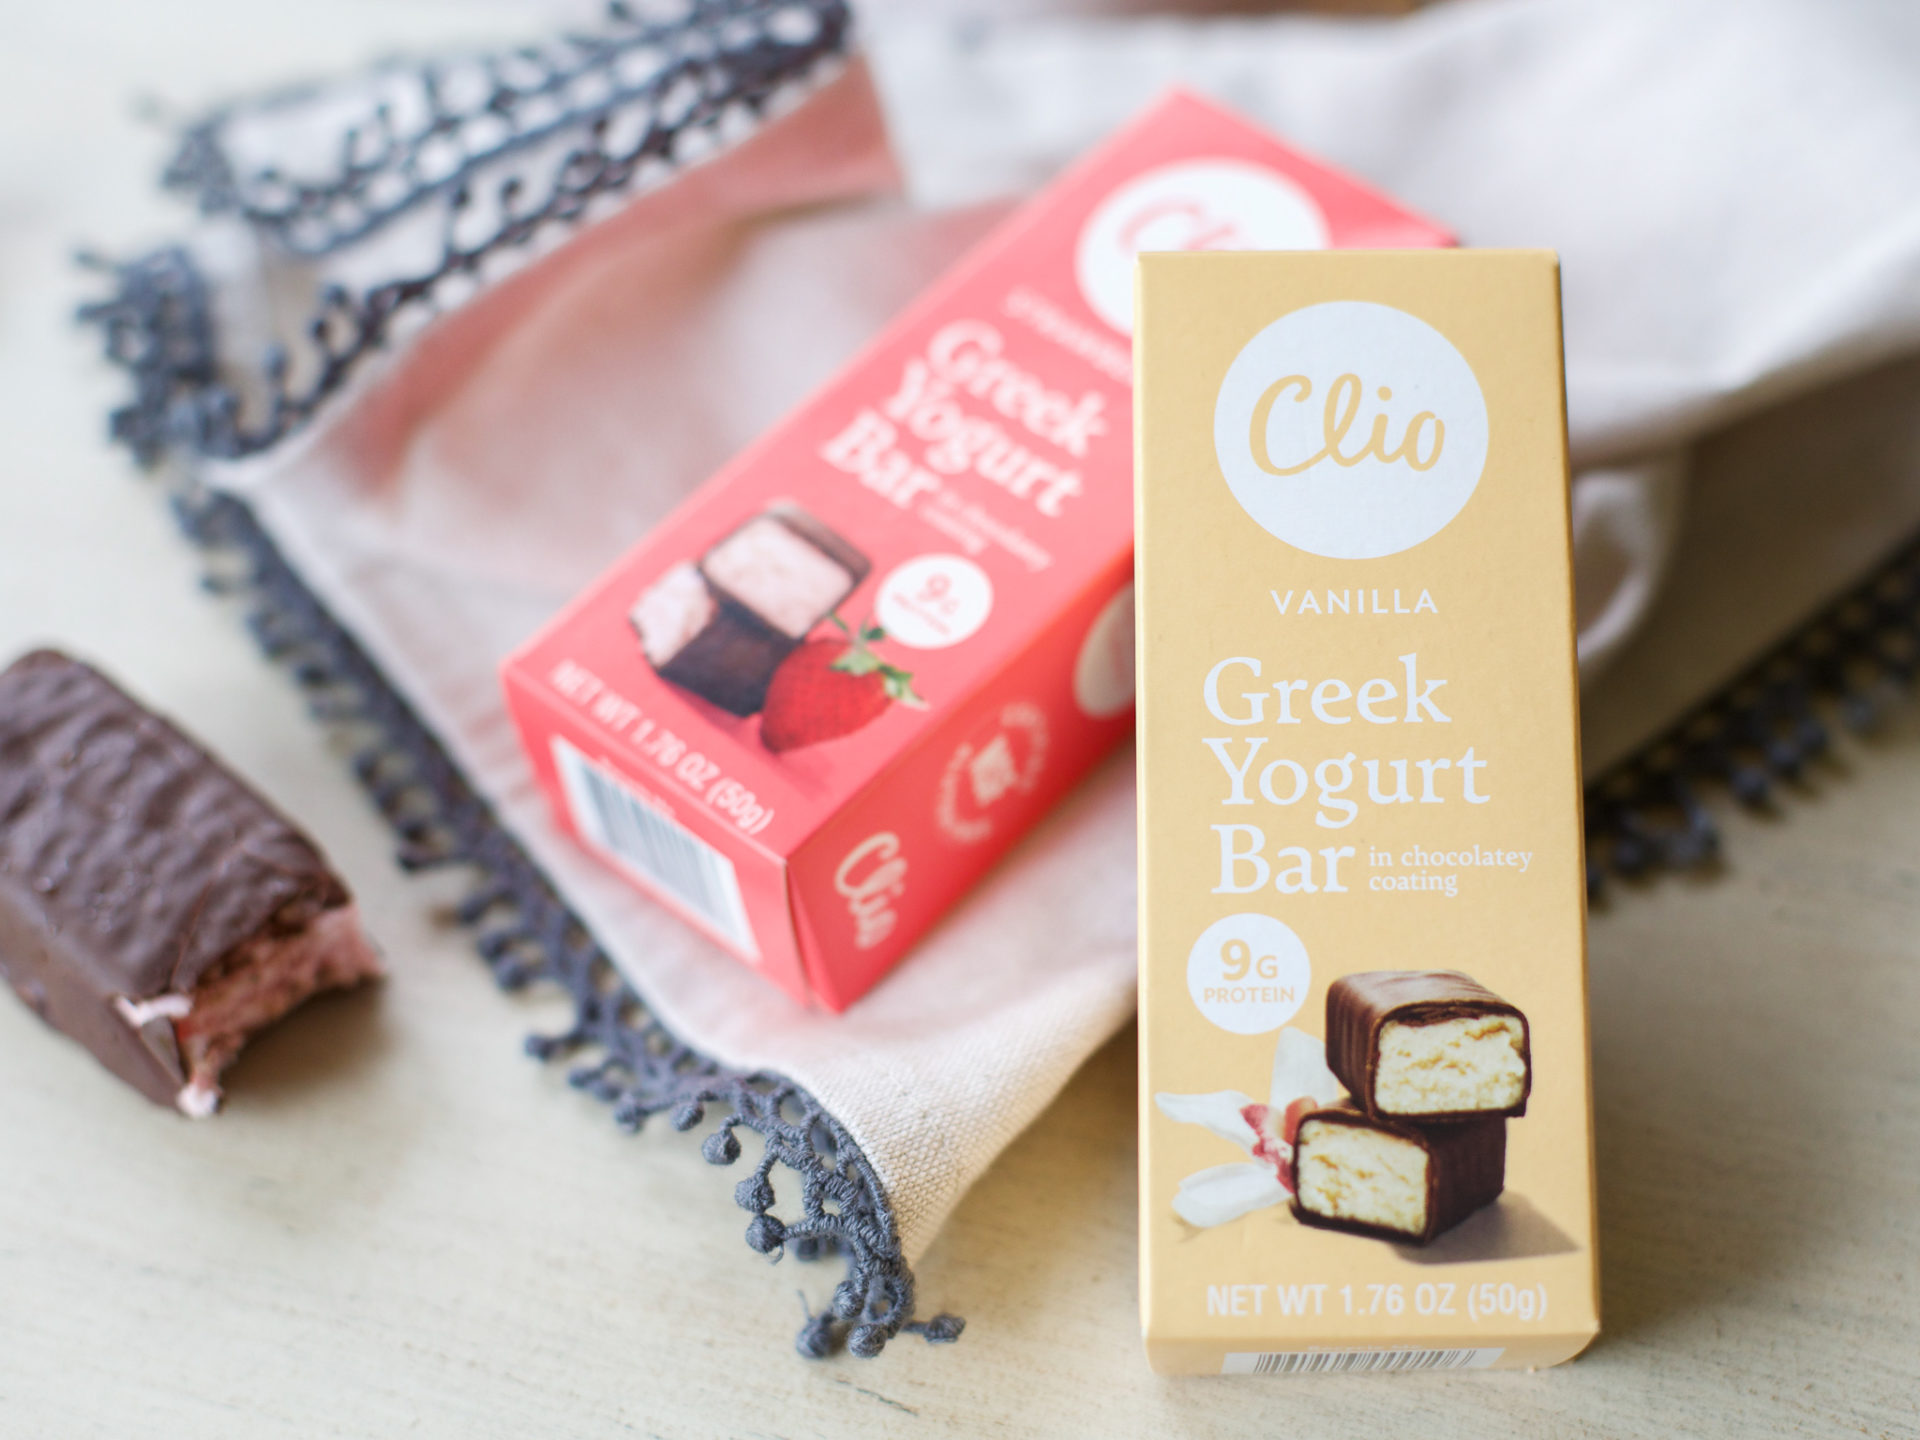 Clio Greek Yogurt Bars As Low As 25¢ At Kroger